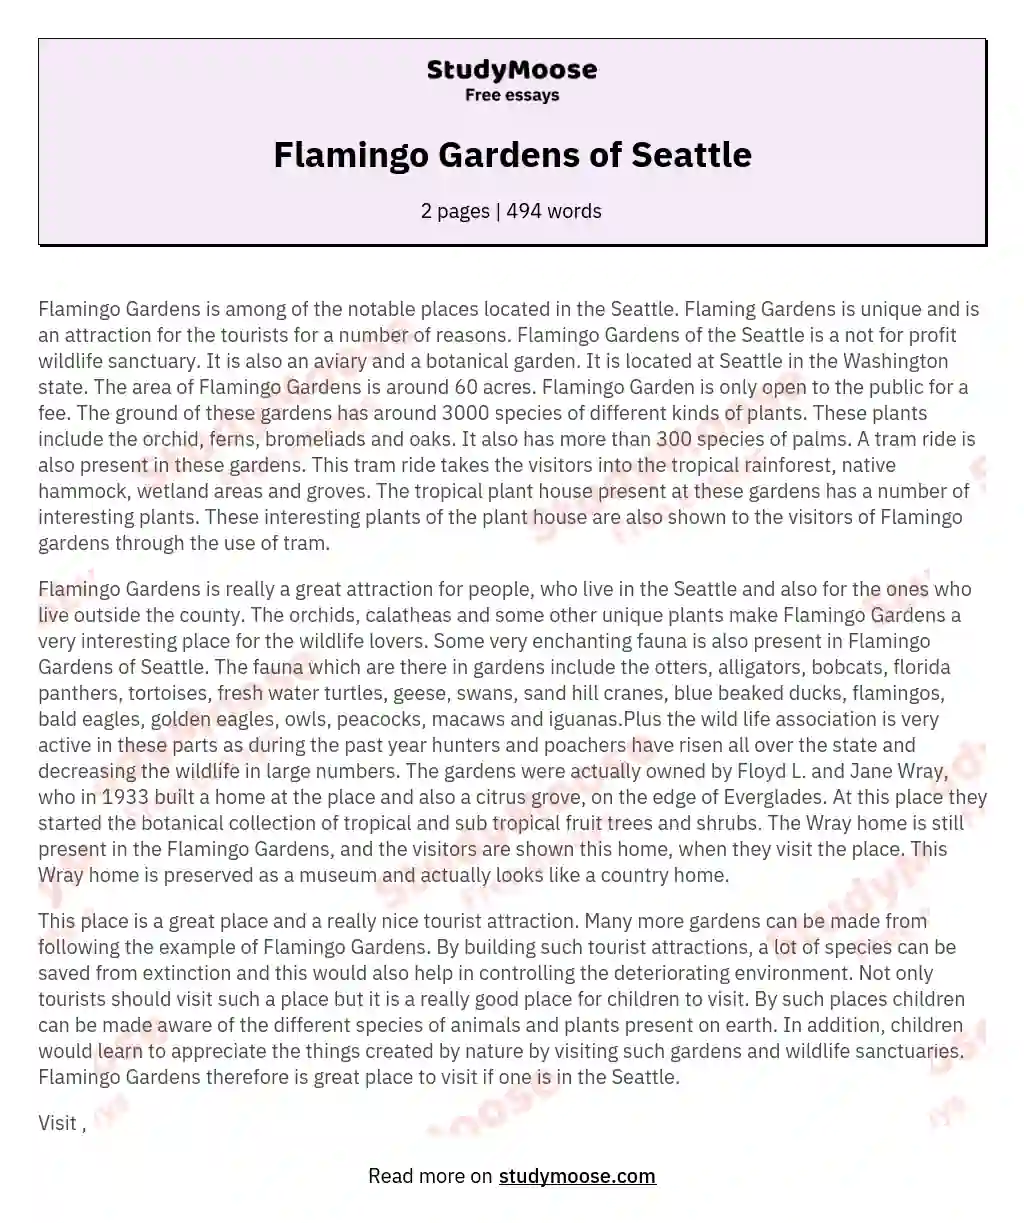 Flamingo Gardens of Seattle